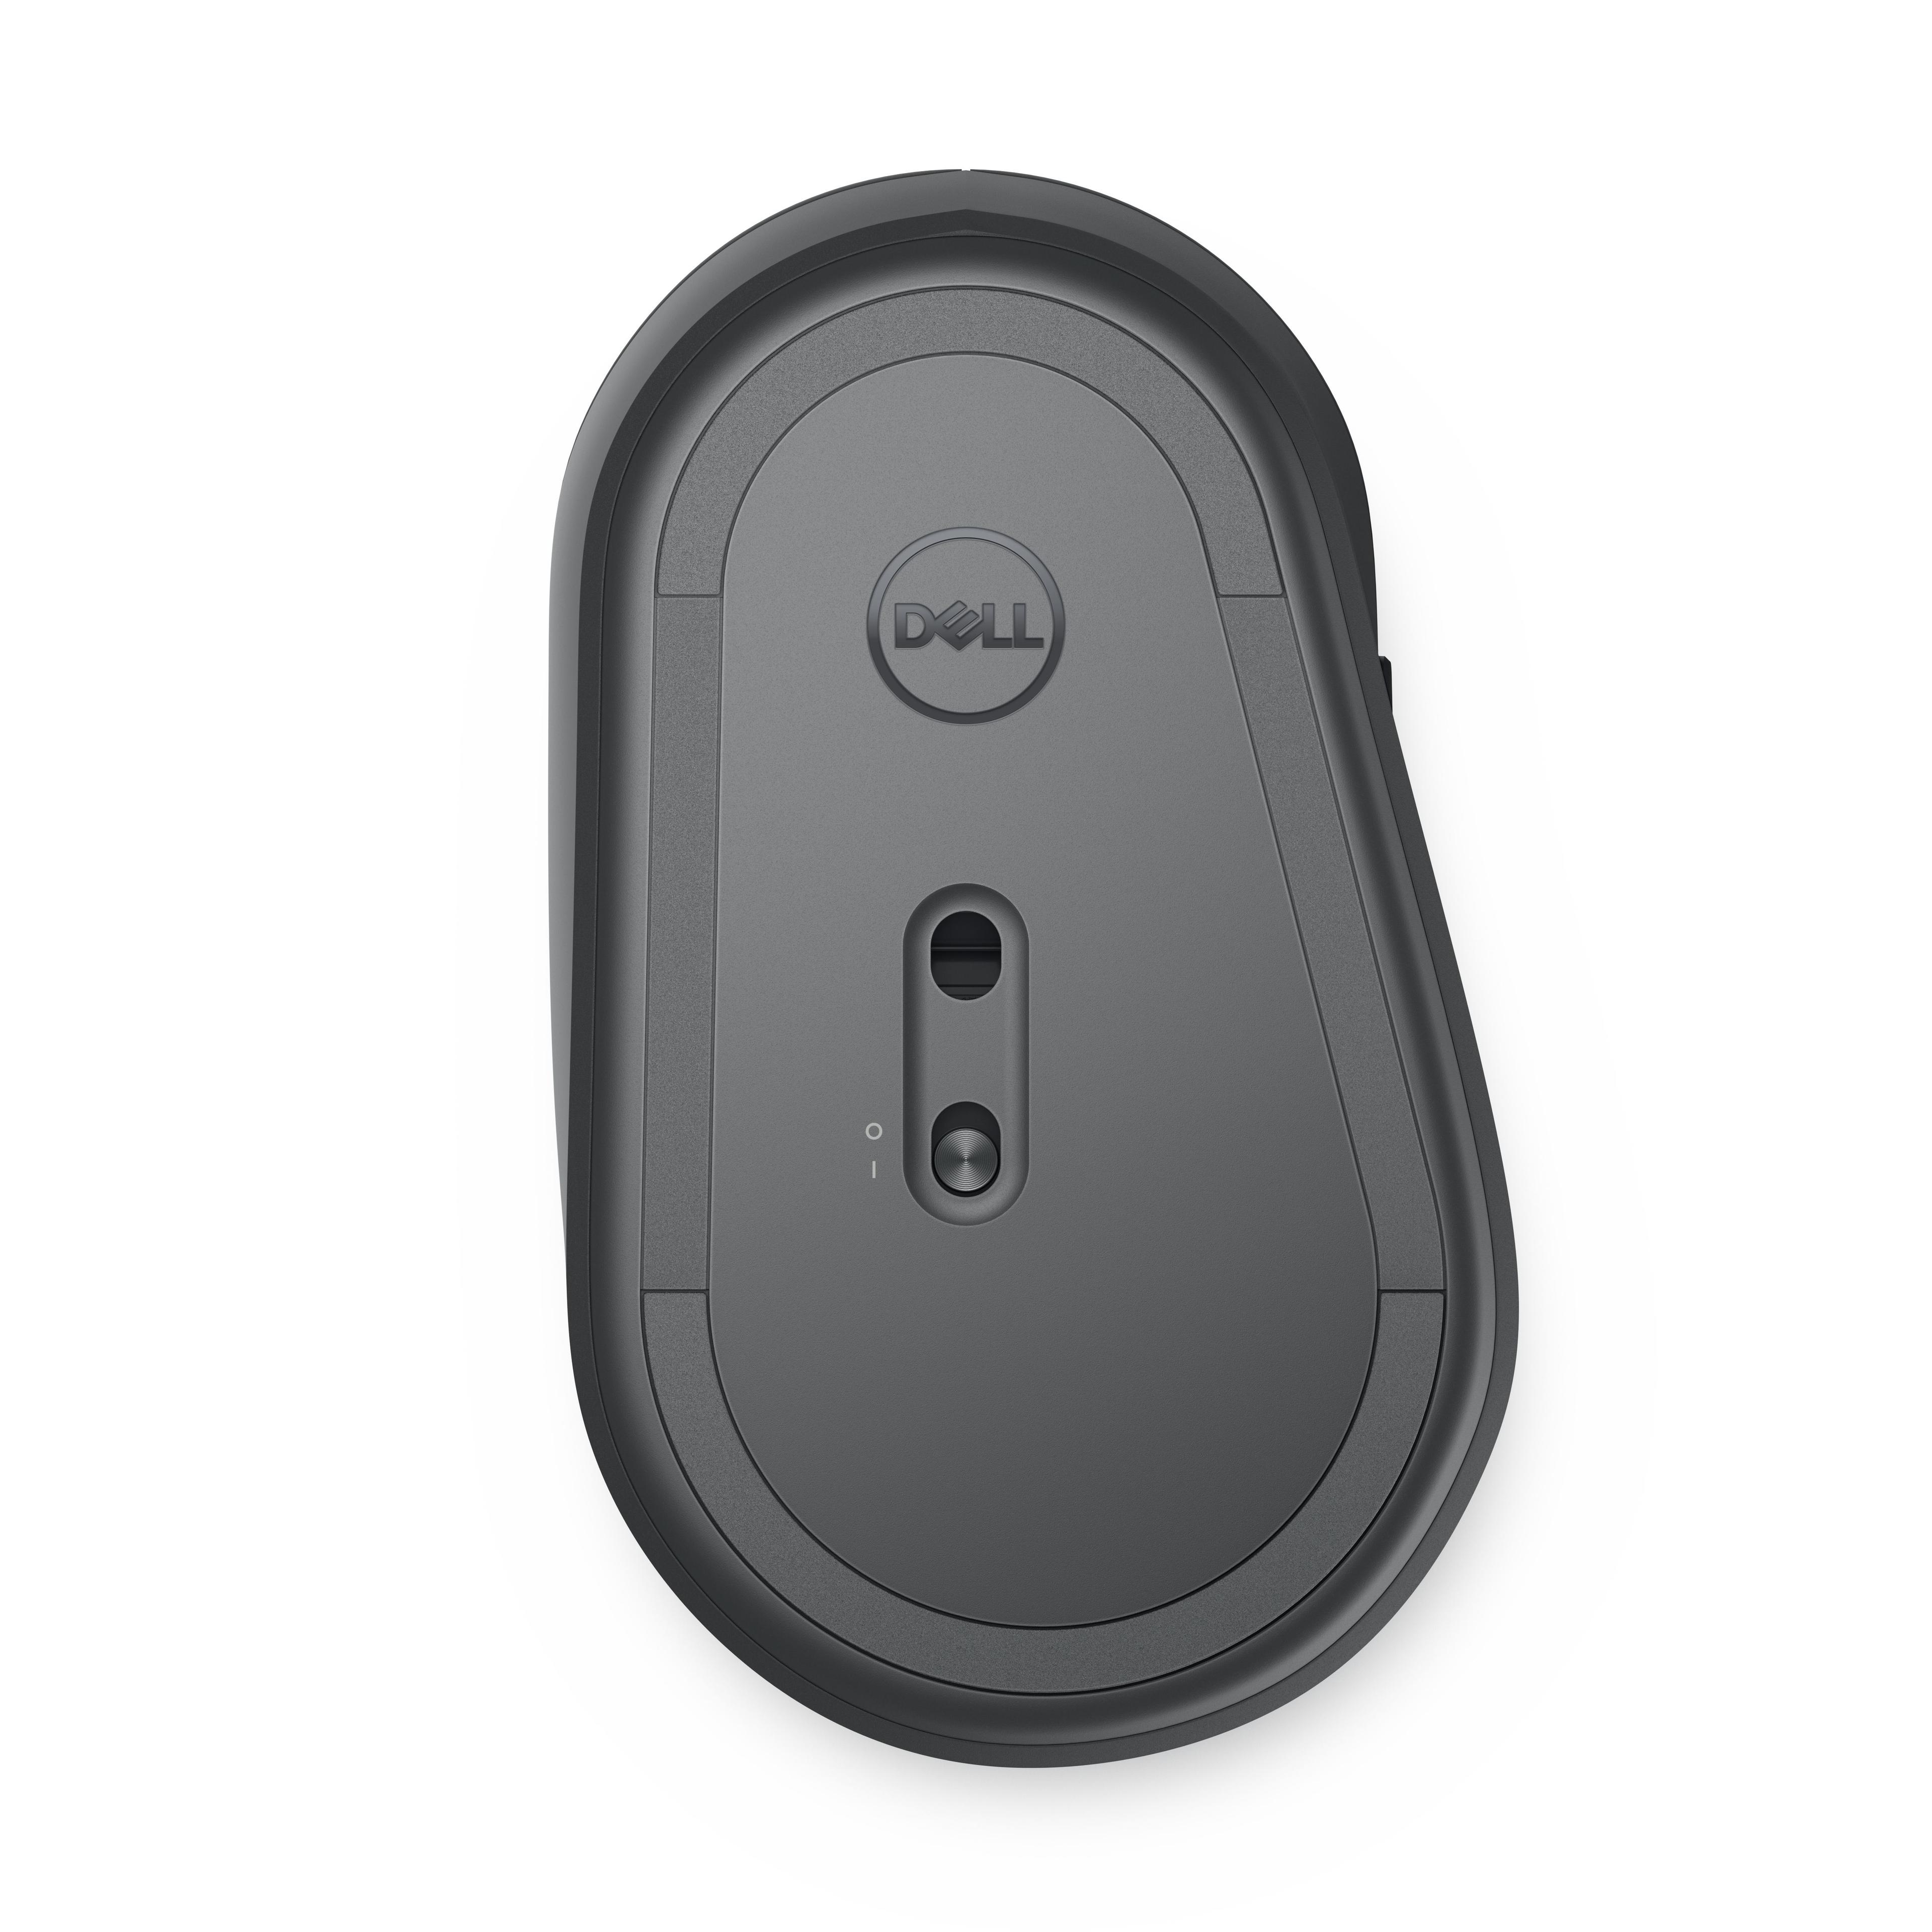 Dell Multi-Device Wireless Mouse